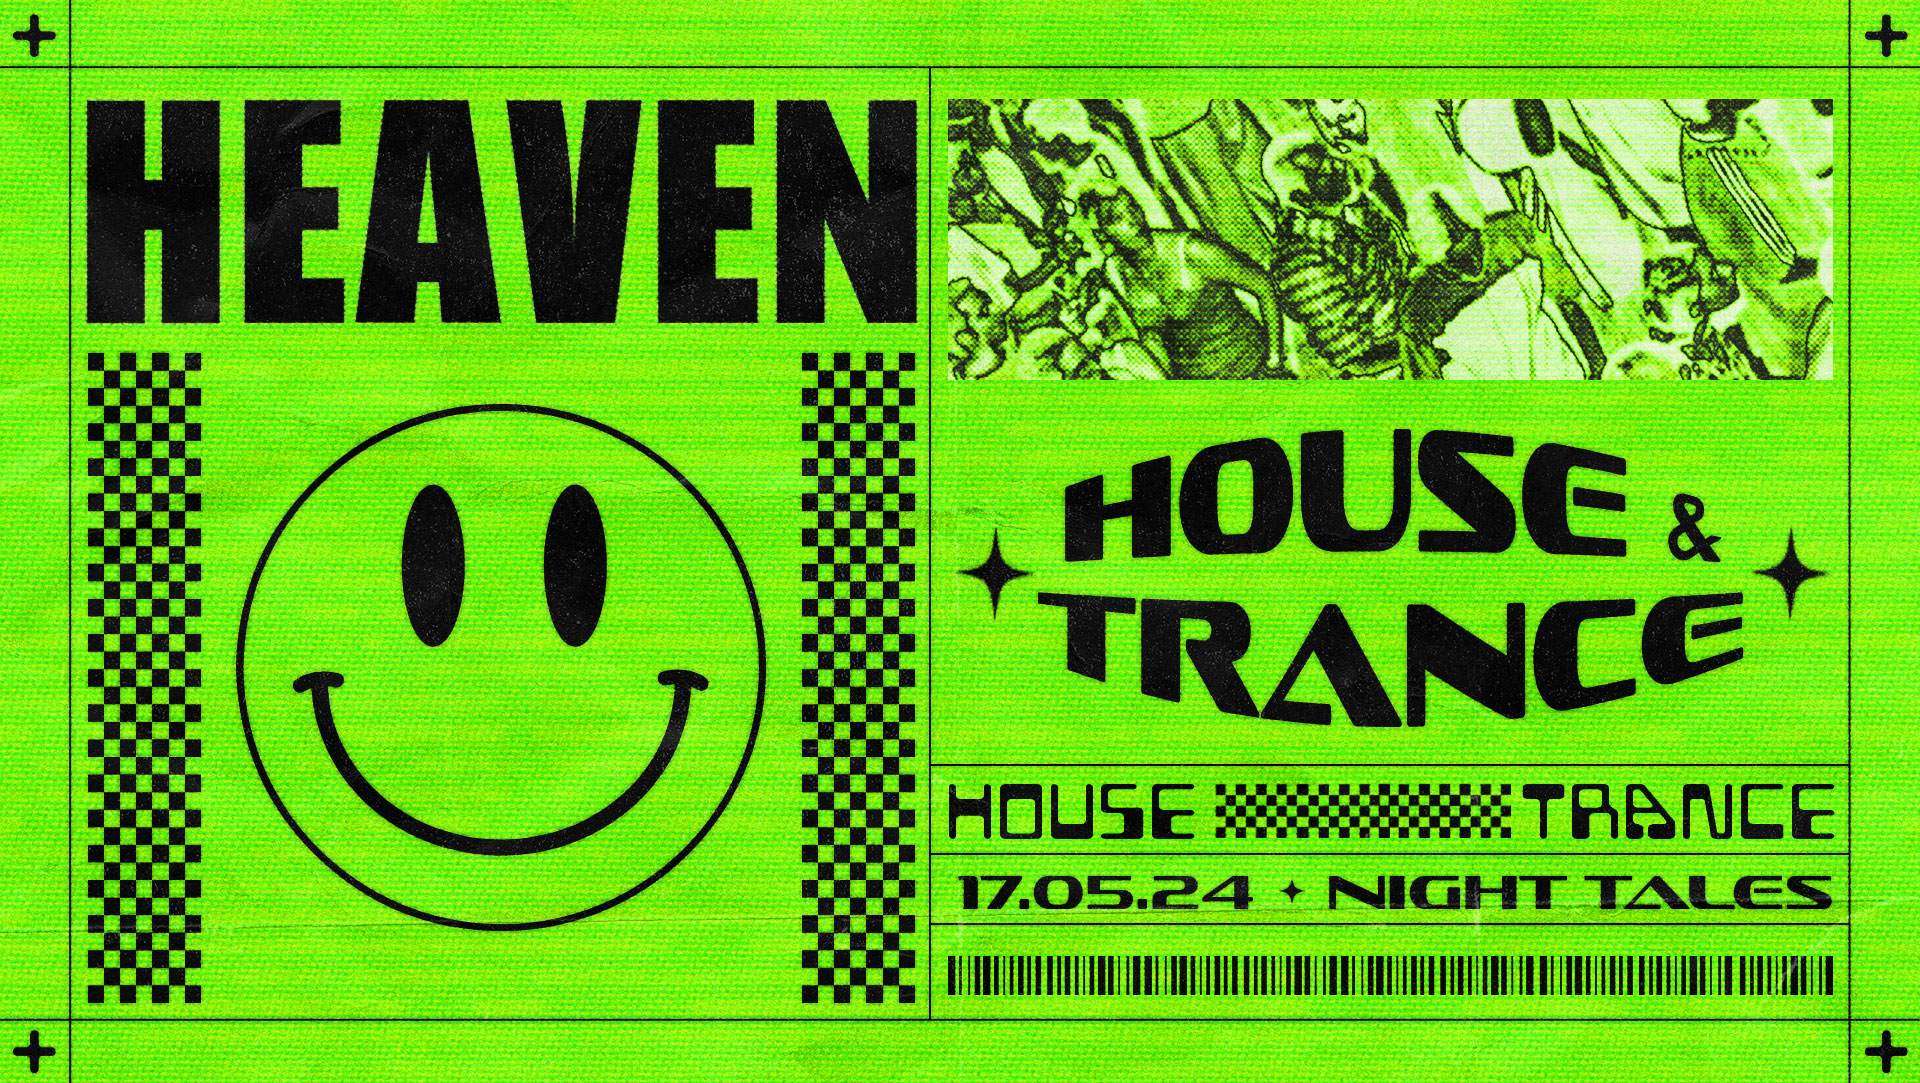 HEAVEN: Classic 90s House & Trance  - フライヤー表